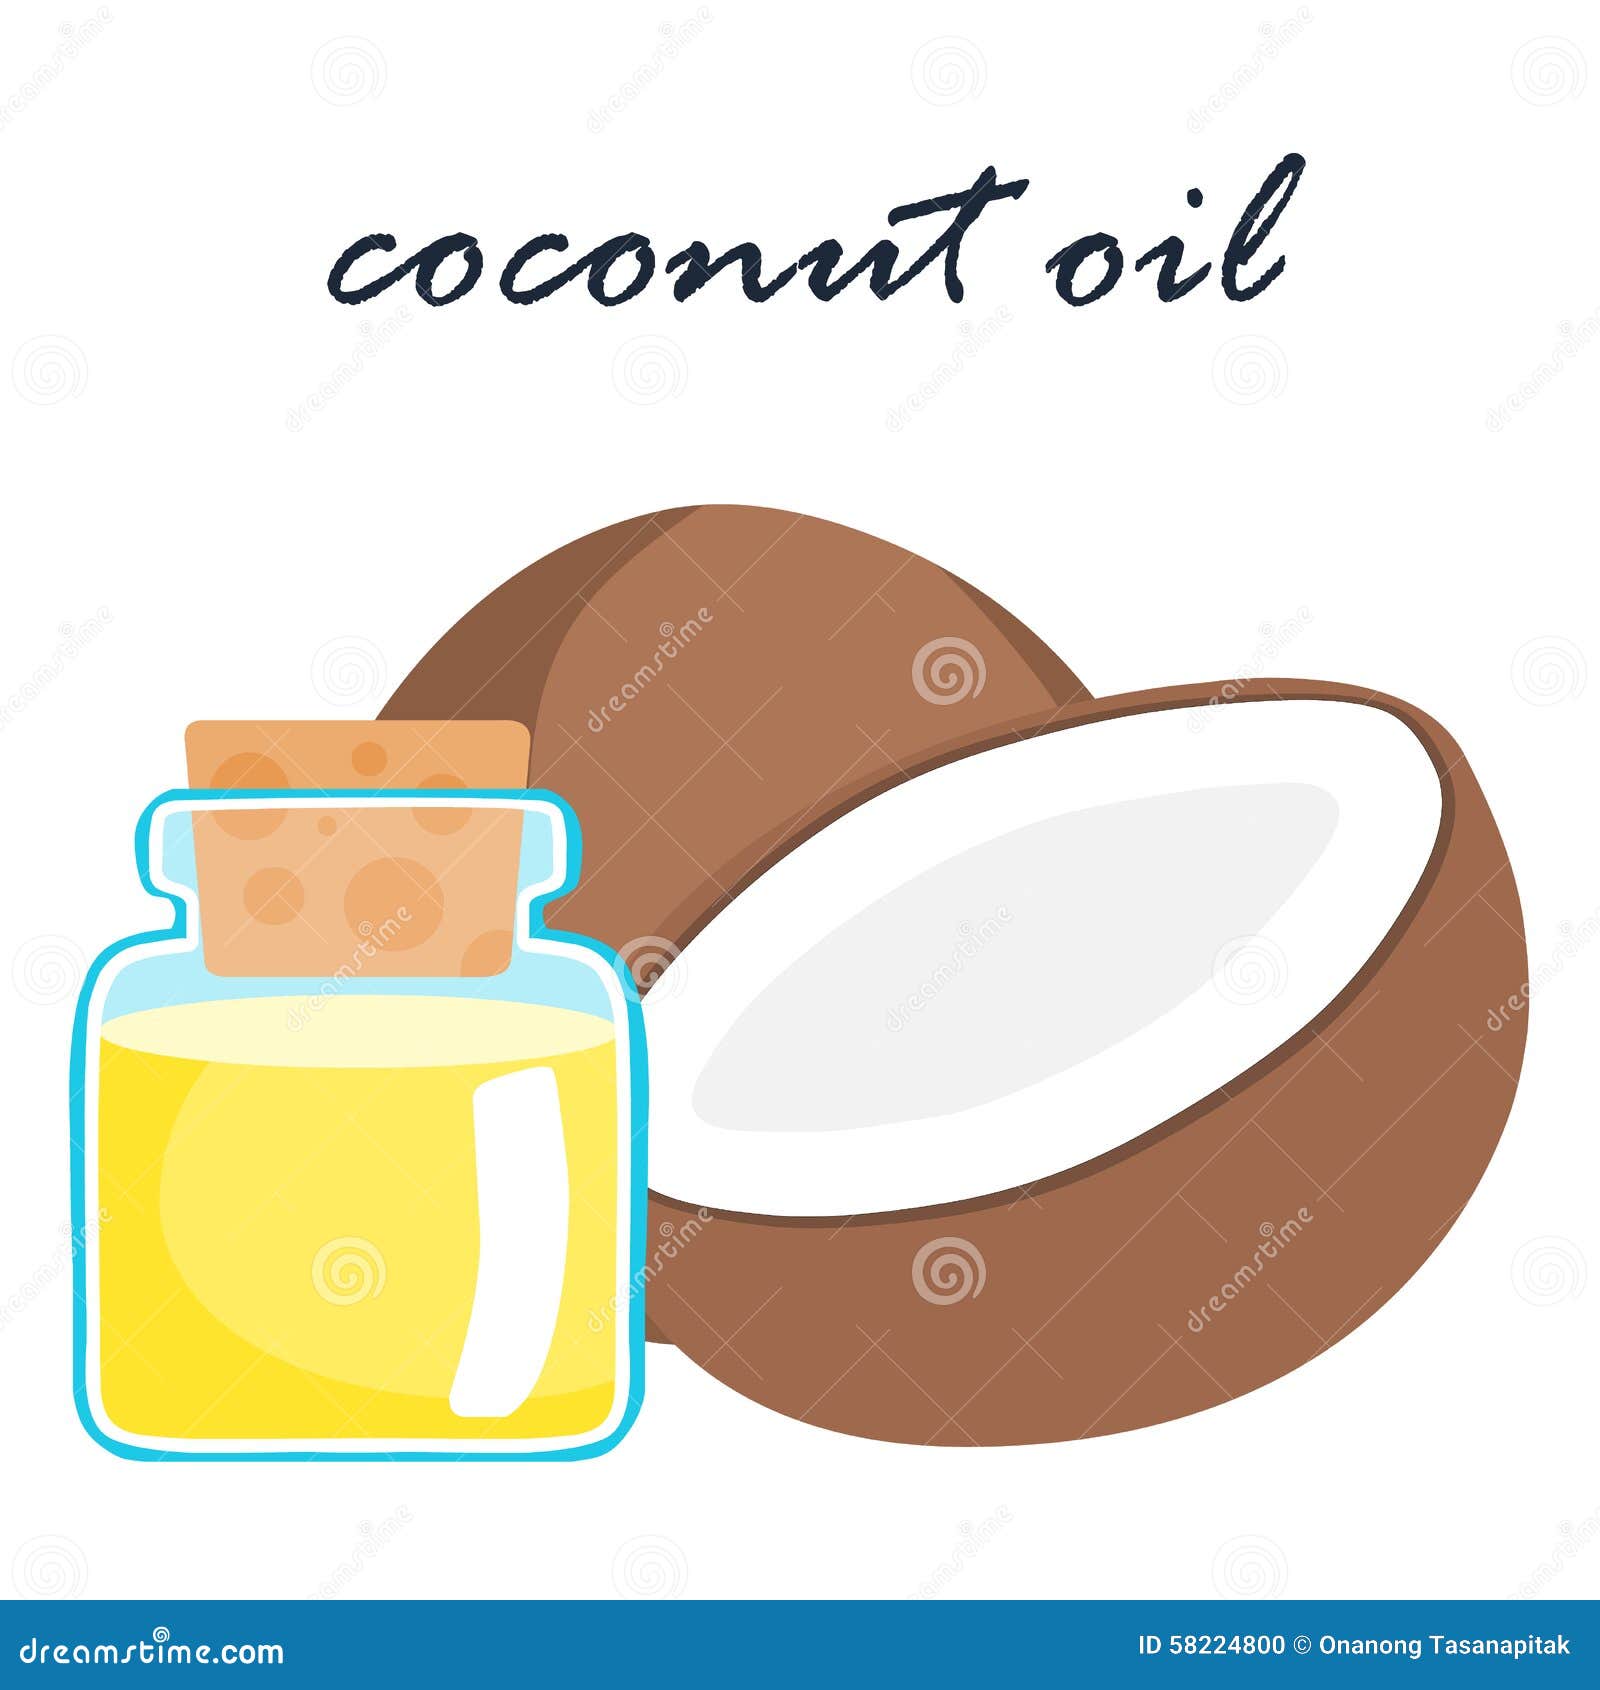 Coconut Oil Super Food Ingredient Illustration Stock Vector - Image ...